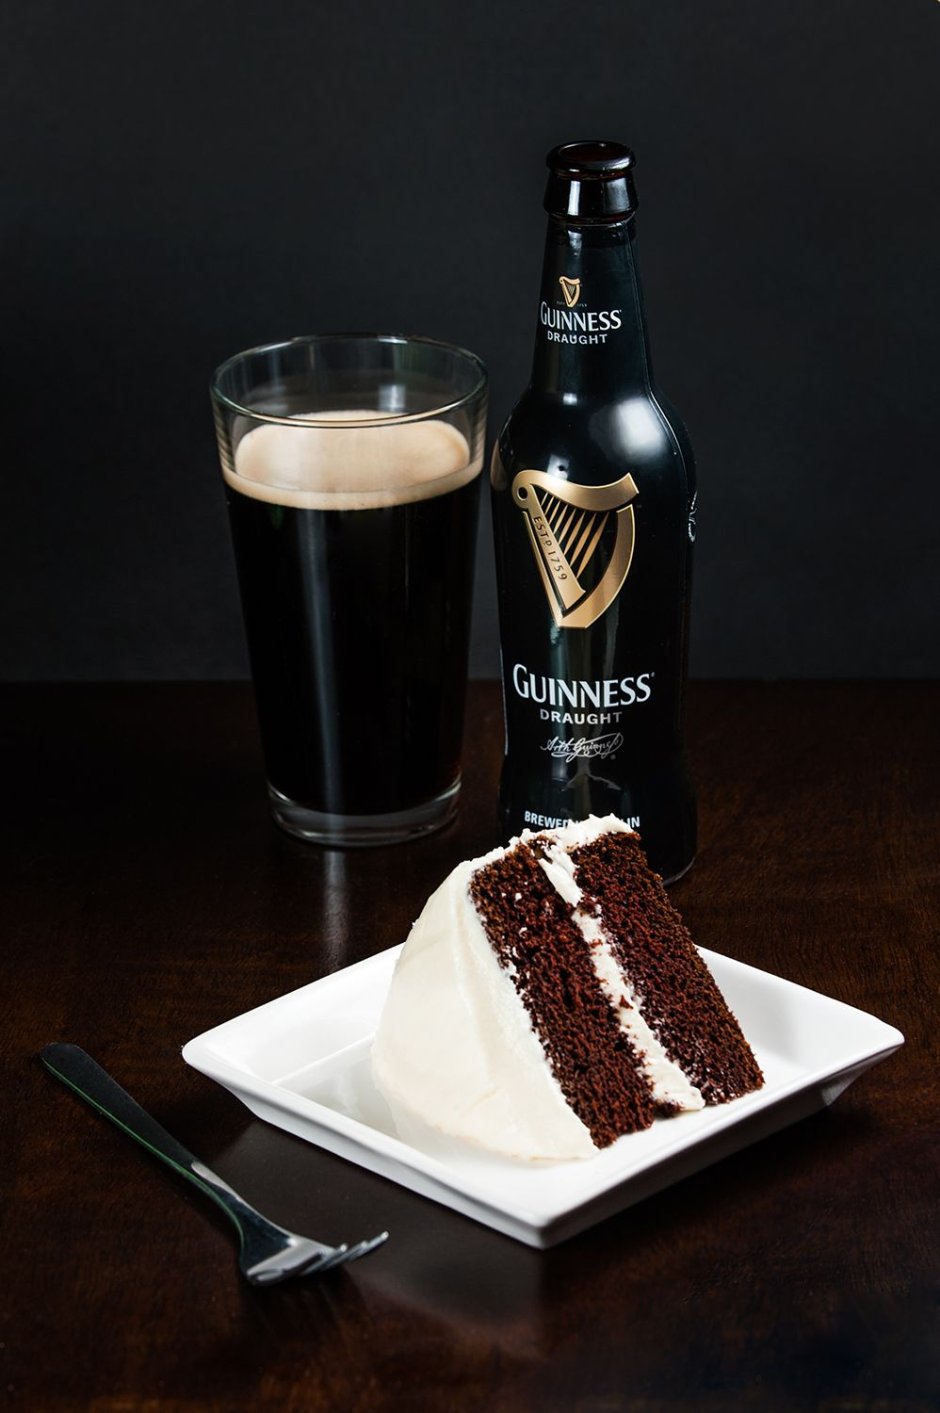 Торт Гиннесс Guinness Cake